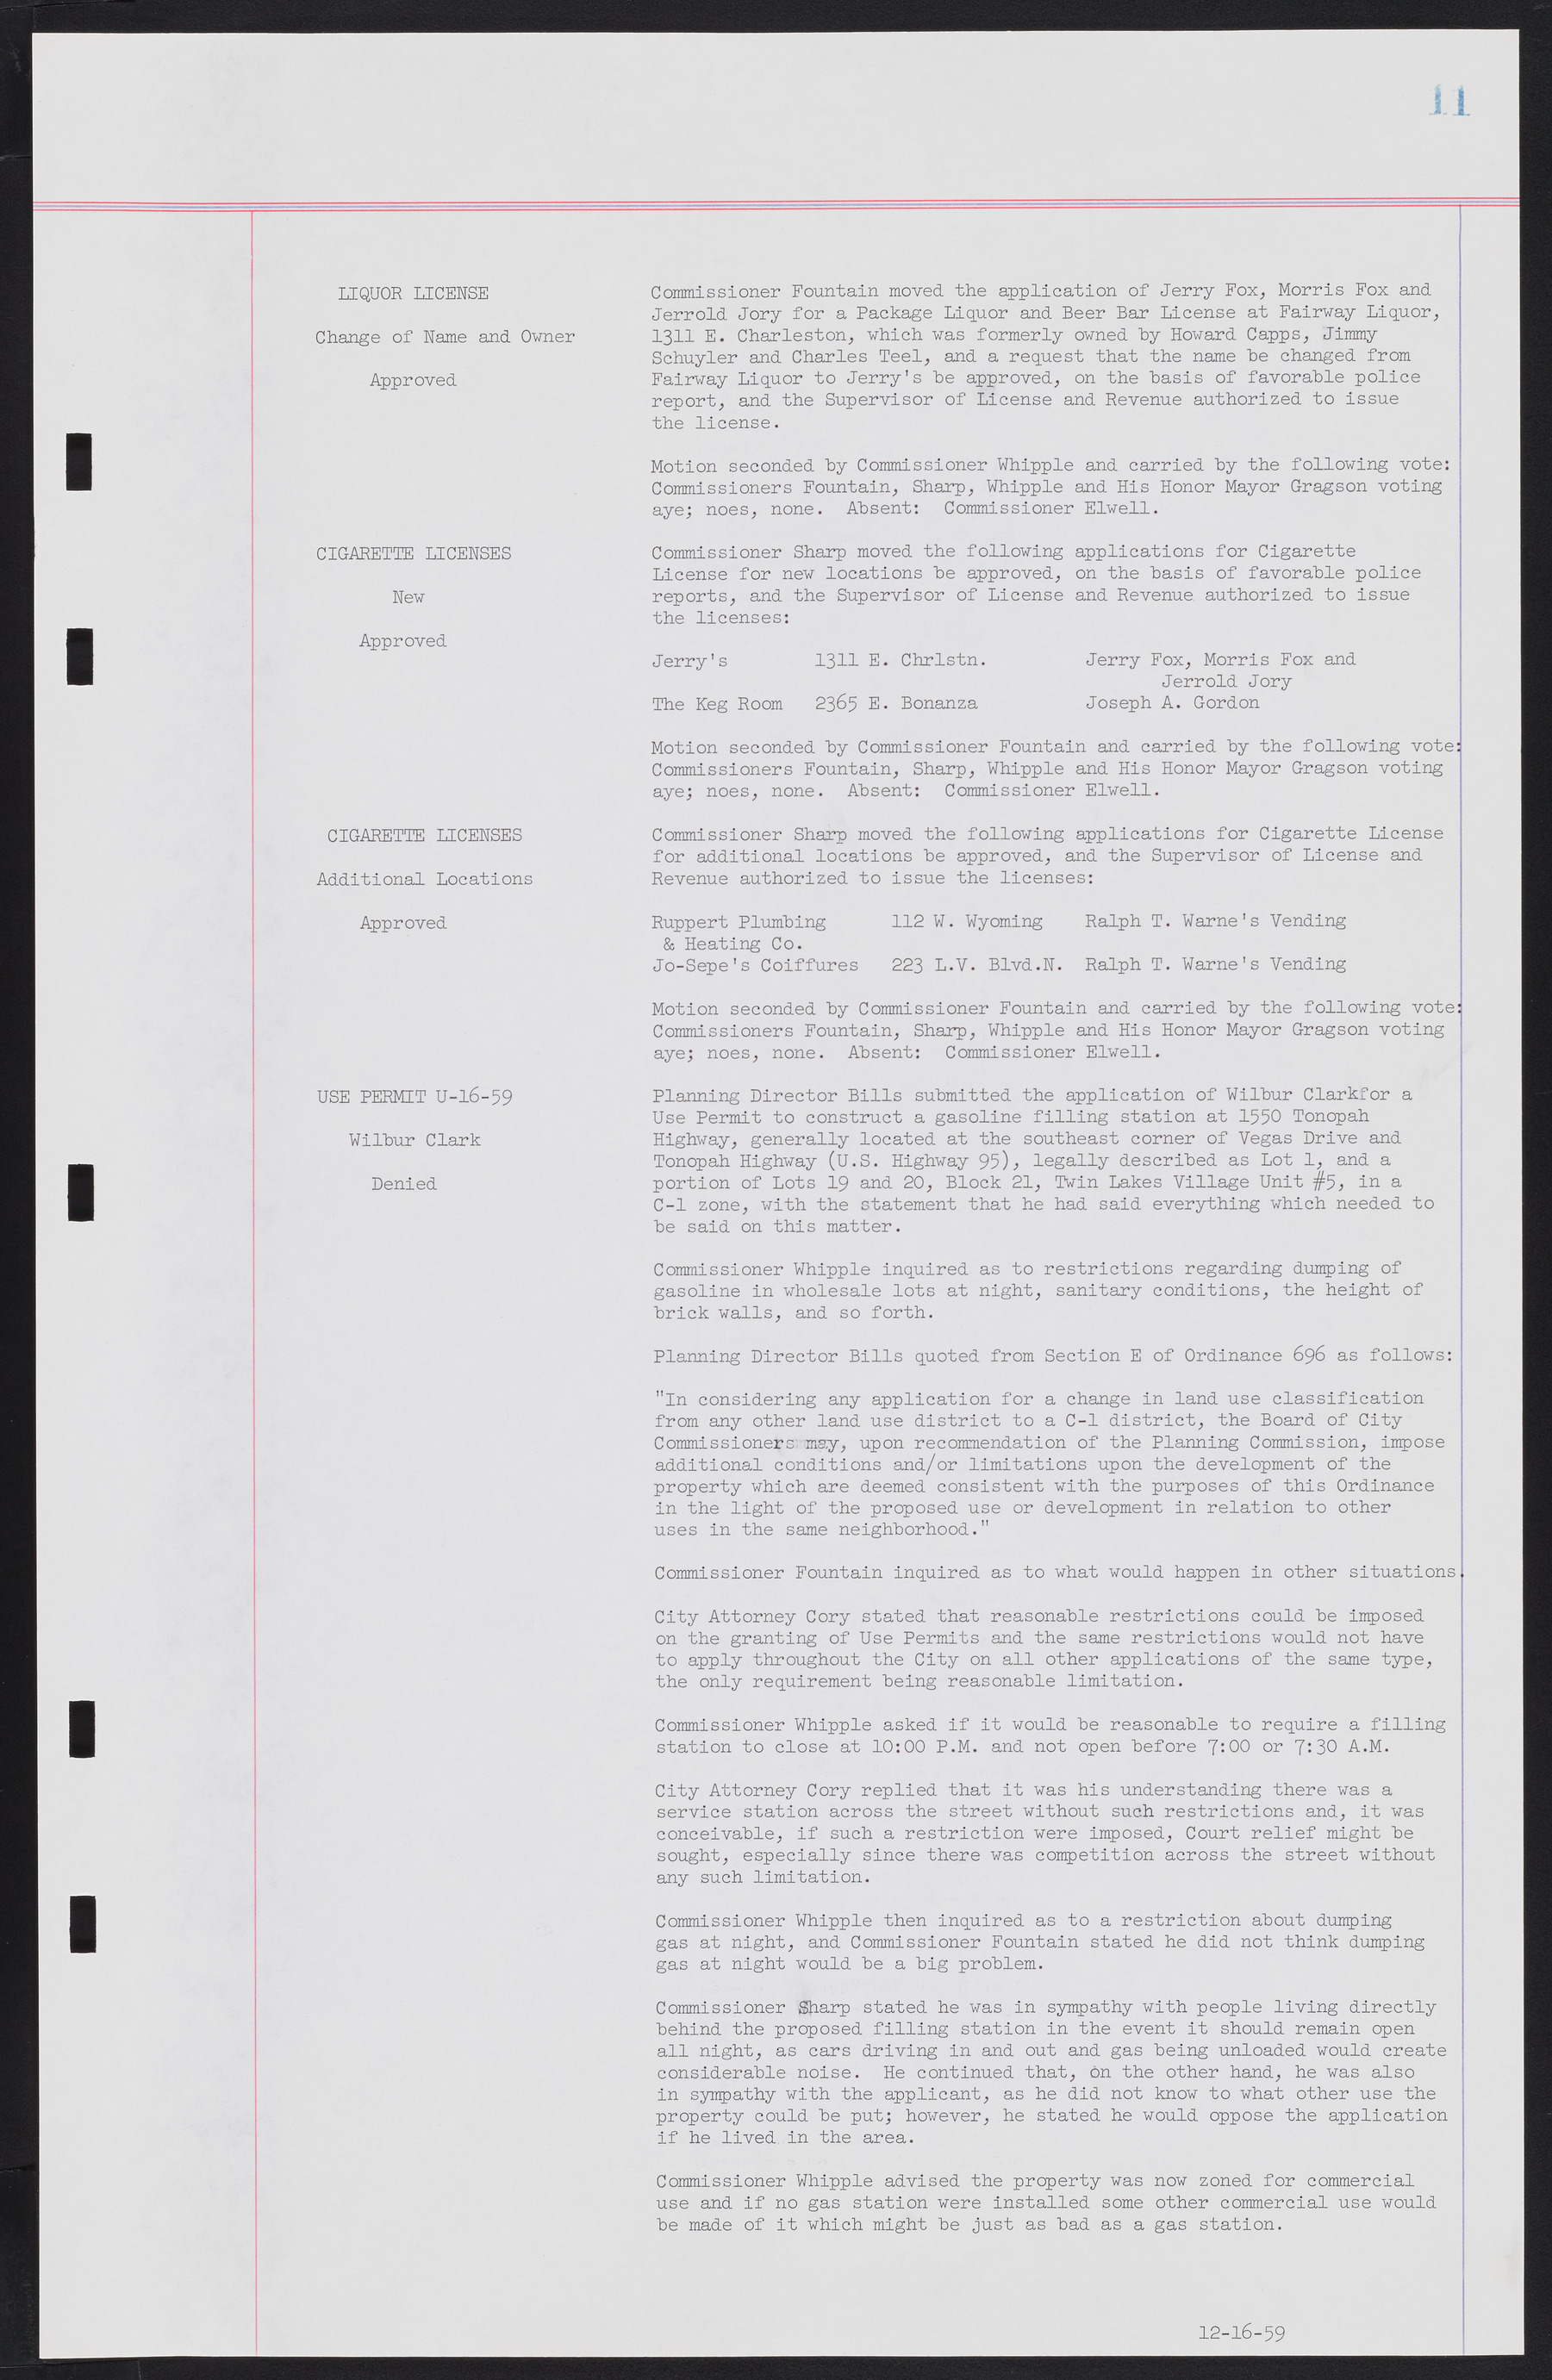 Las Vegas City Commission Minutes, December 8, 1959 to February 17, 1960, lvc000012-15